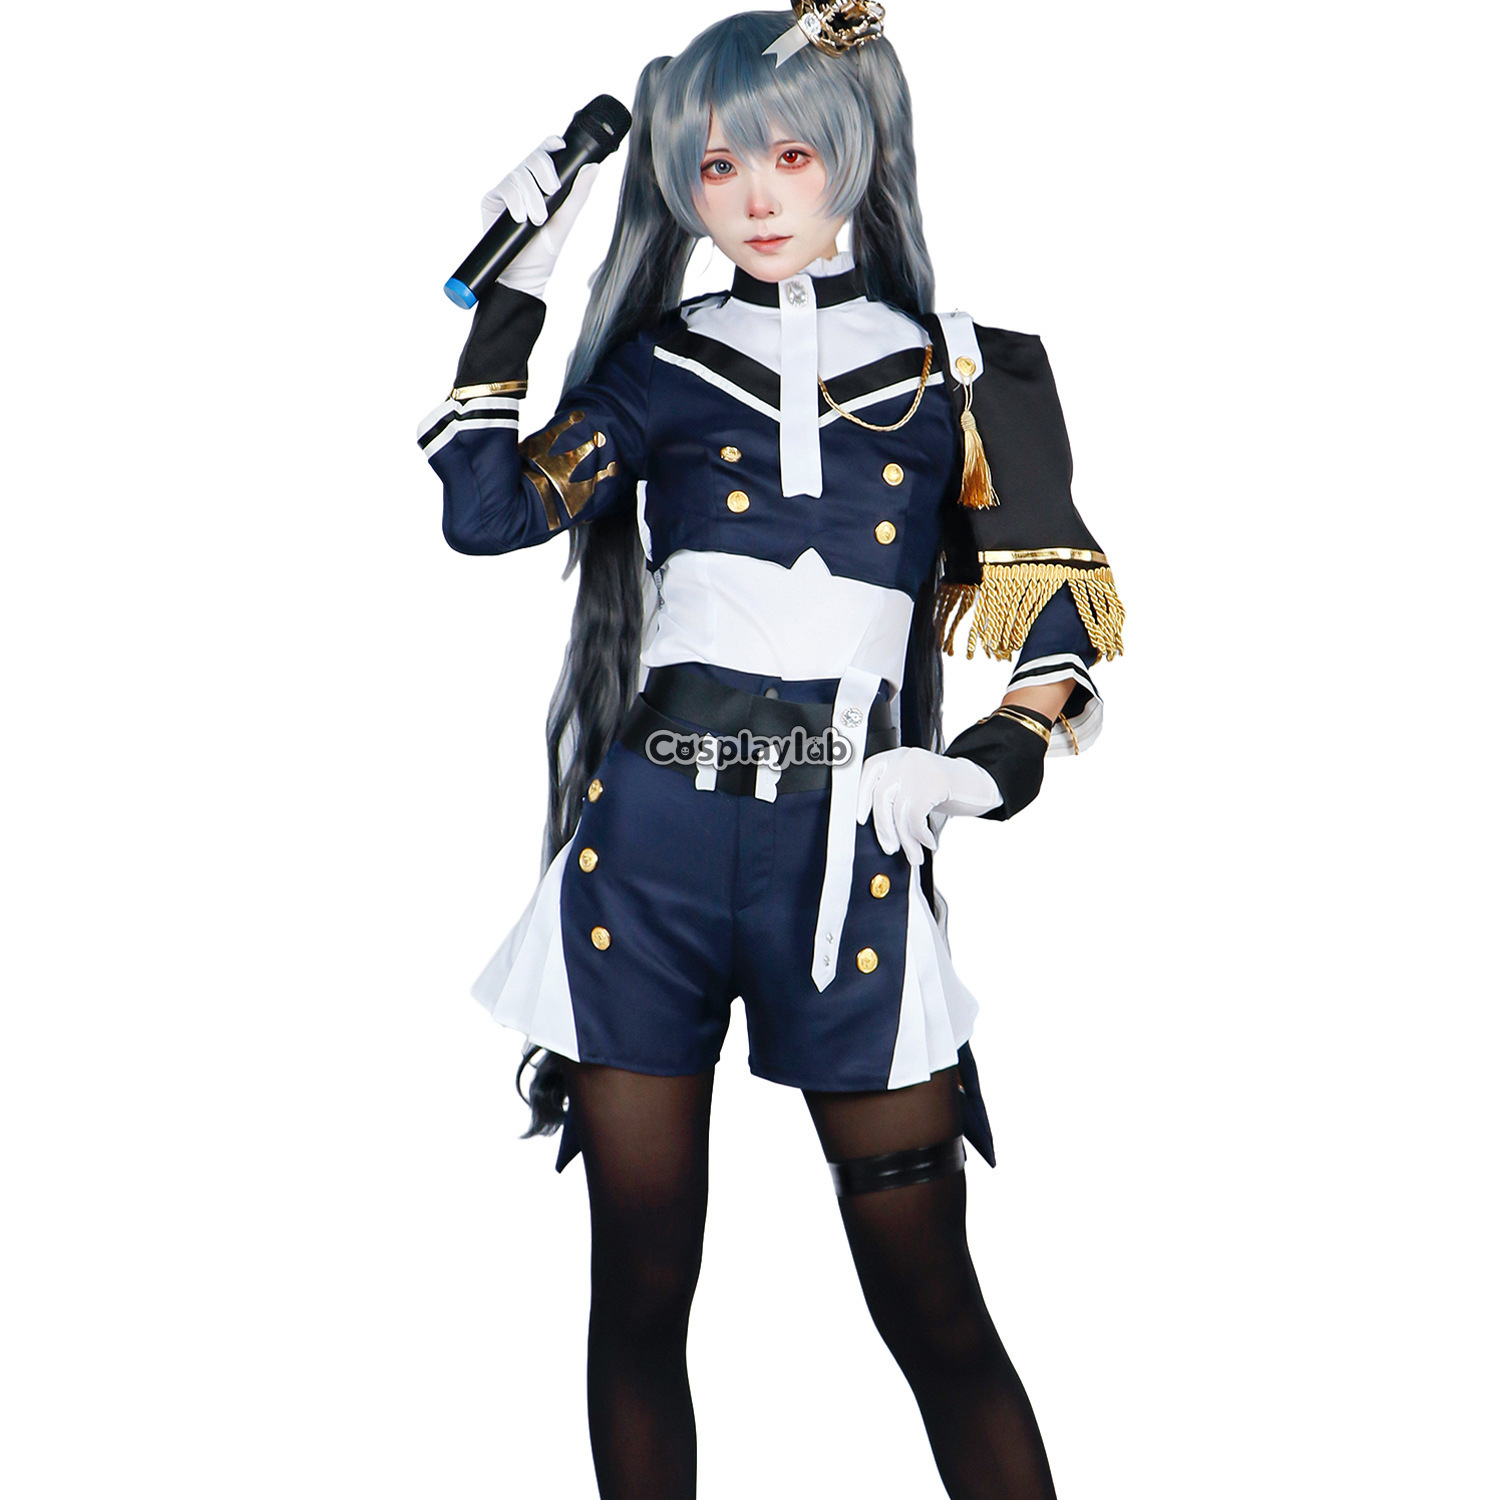 Hatsune Miku Military Uniform Cosplay Costume Outfit